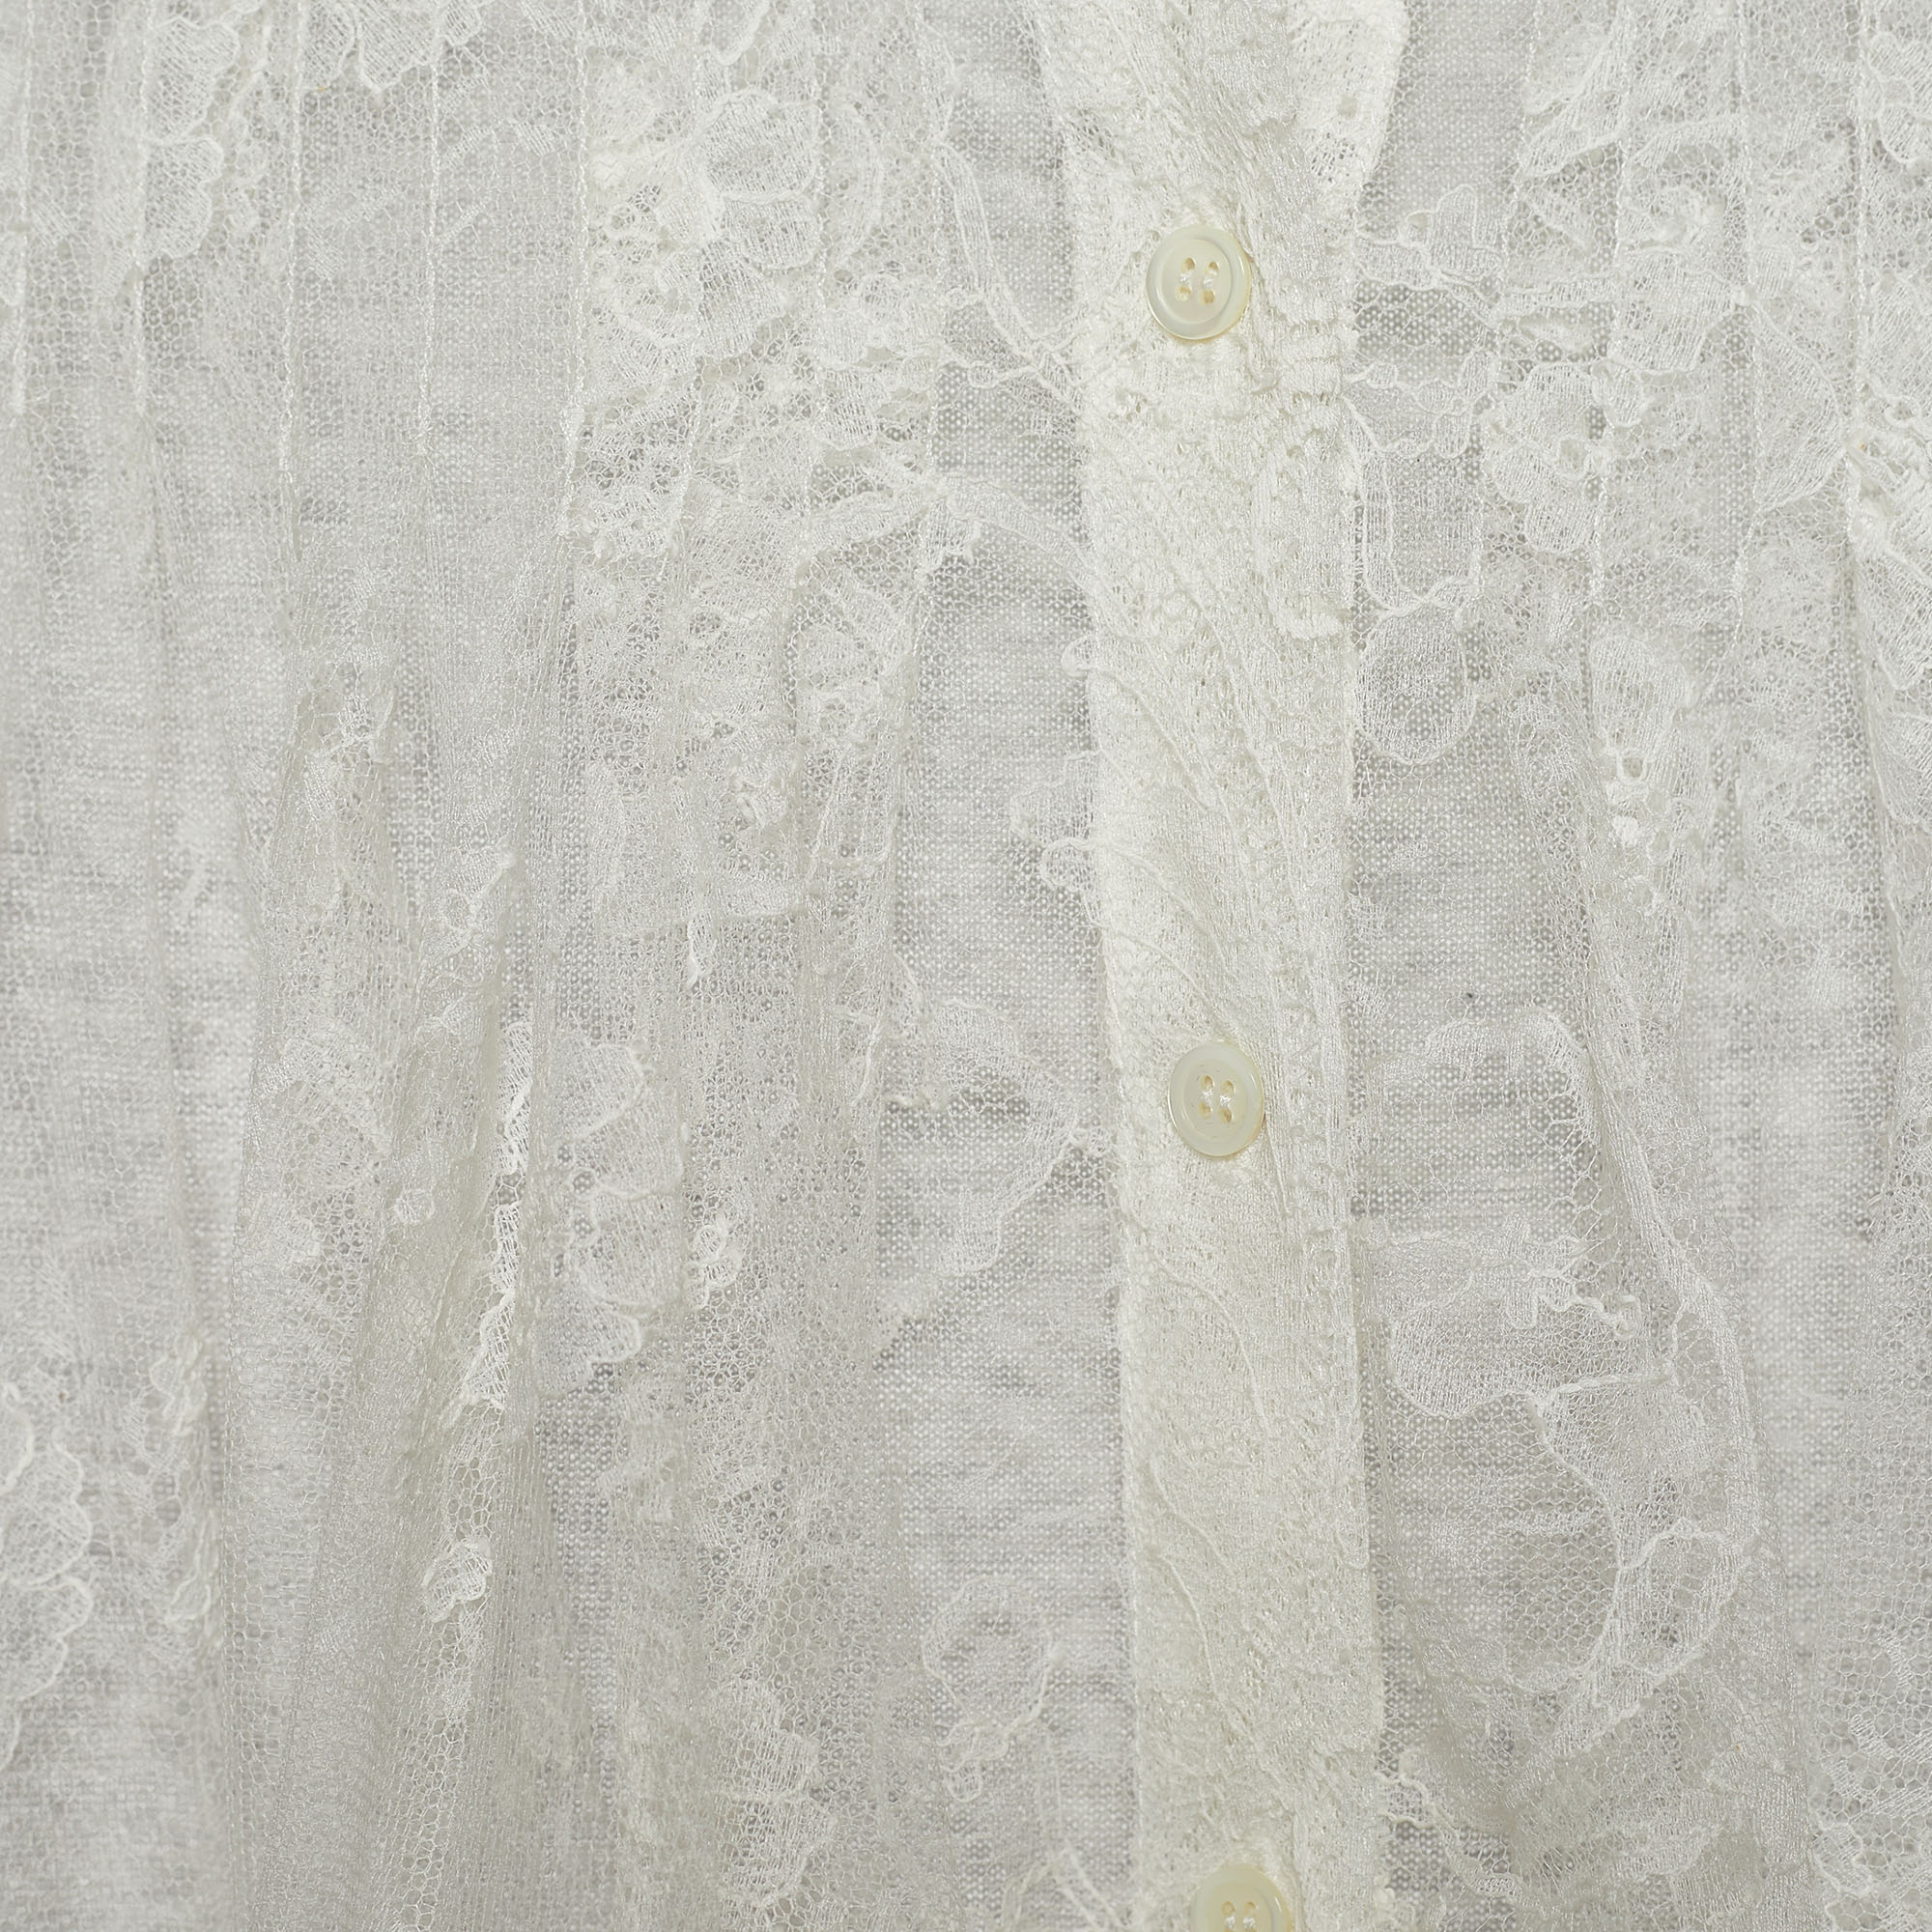 Sacai White Lace & Cotton Paneled Button Front Top S